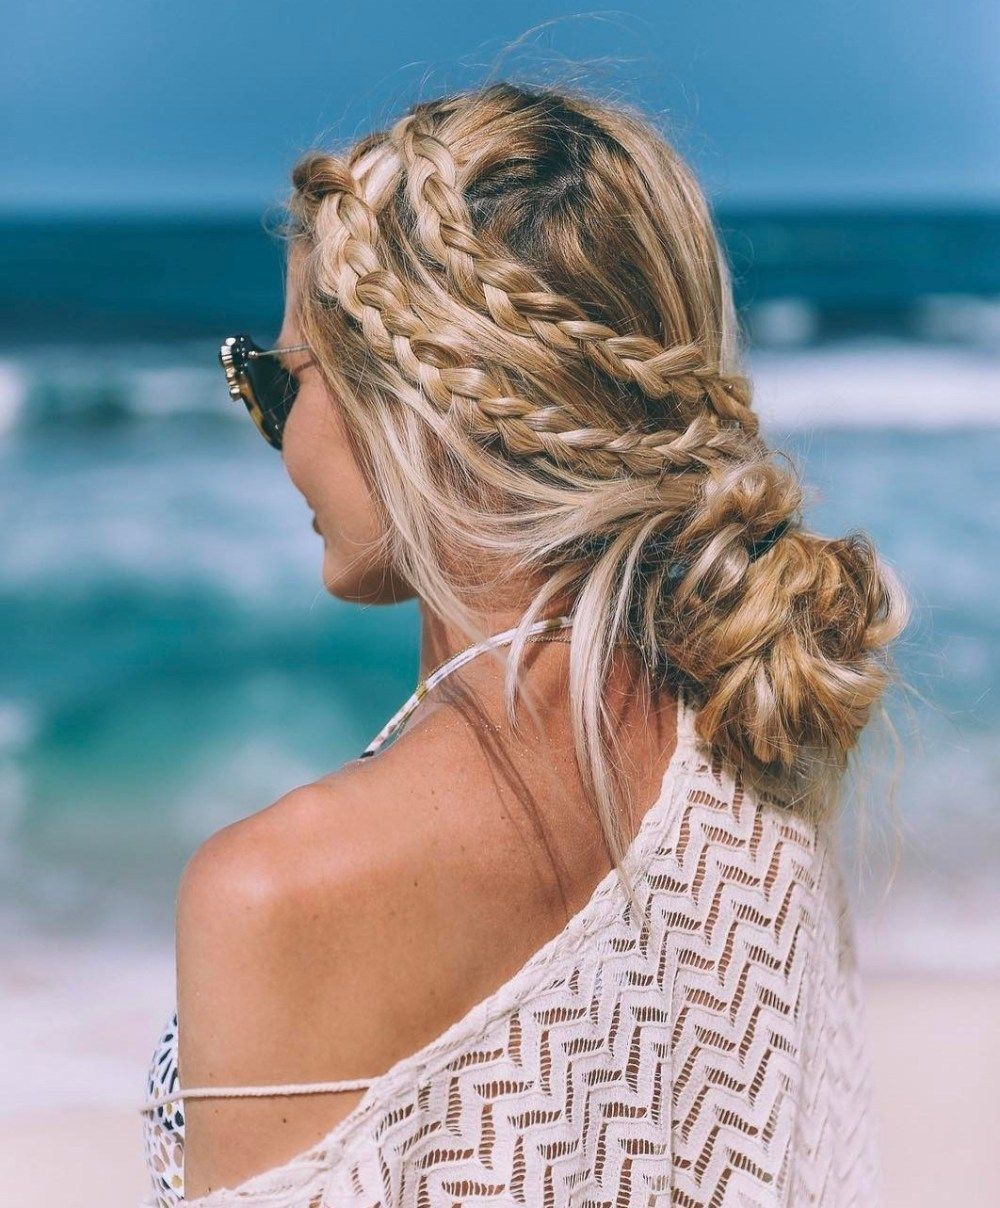 11 summer hairstyles Braided ideas